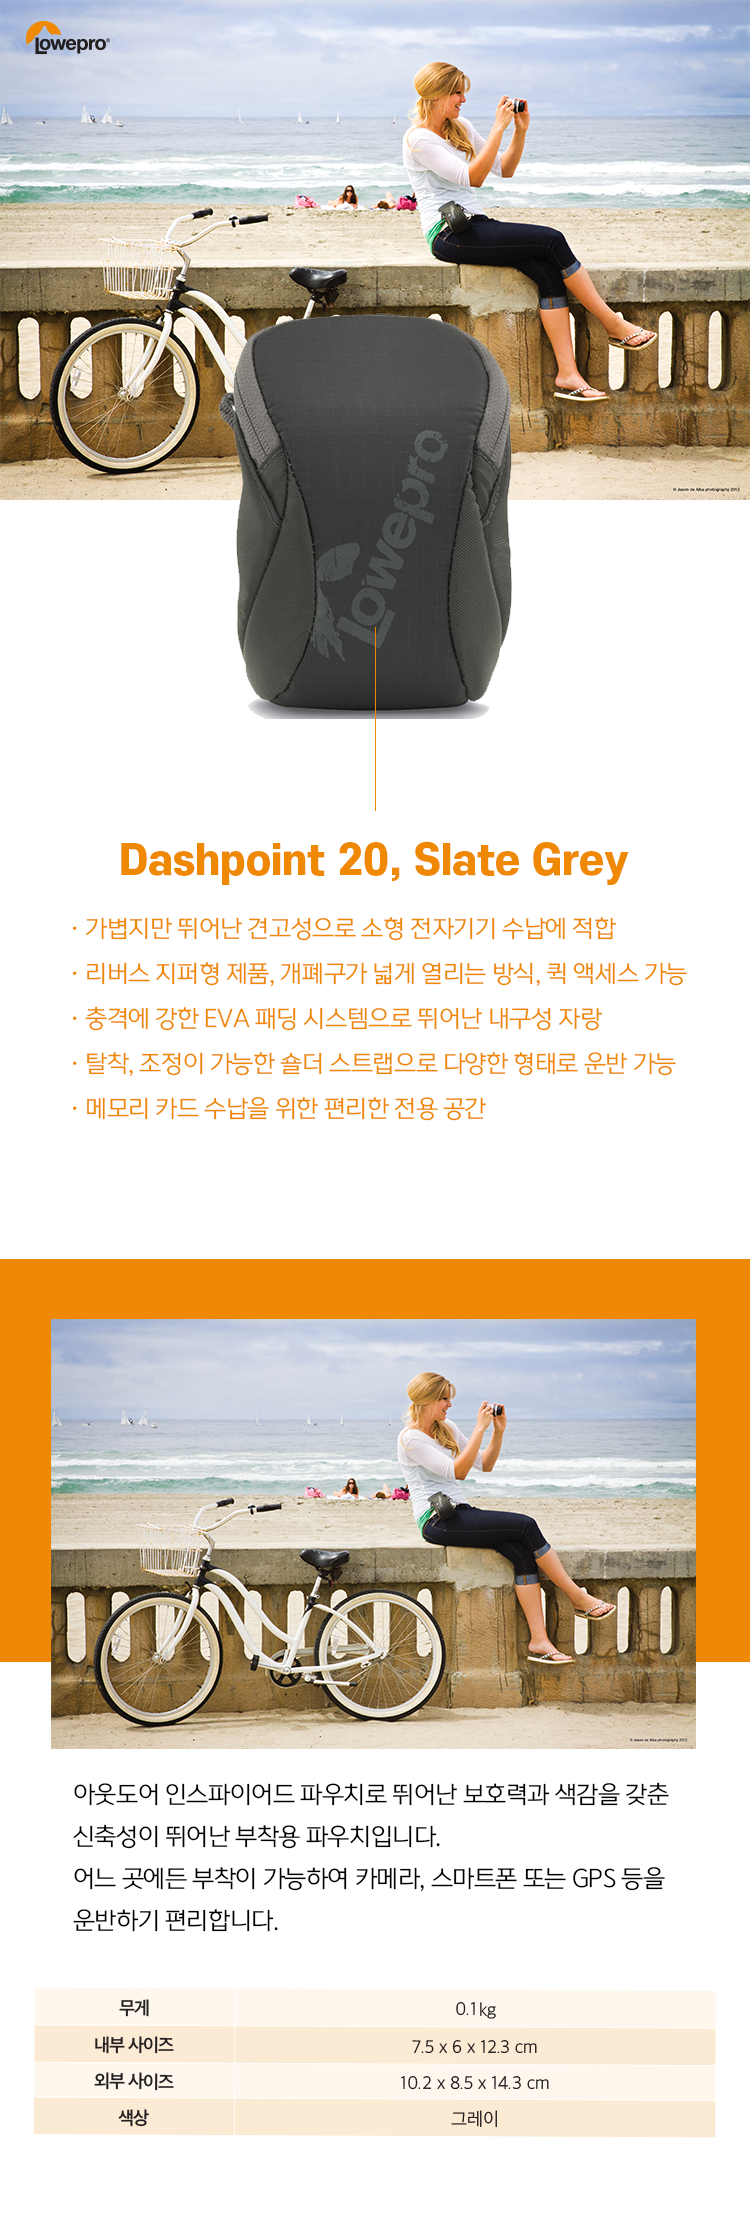 Dashpoint 20, Slate Grey